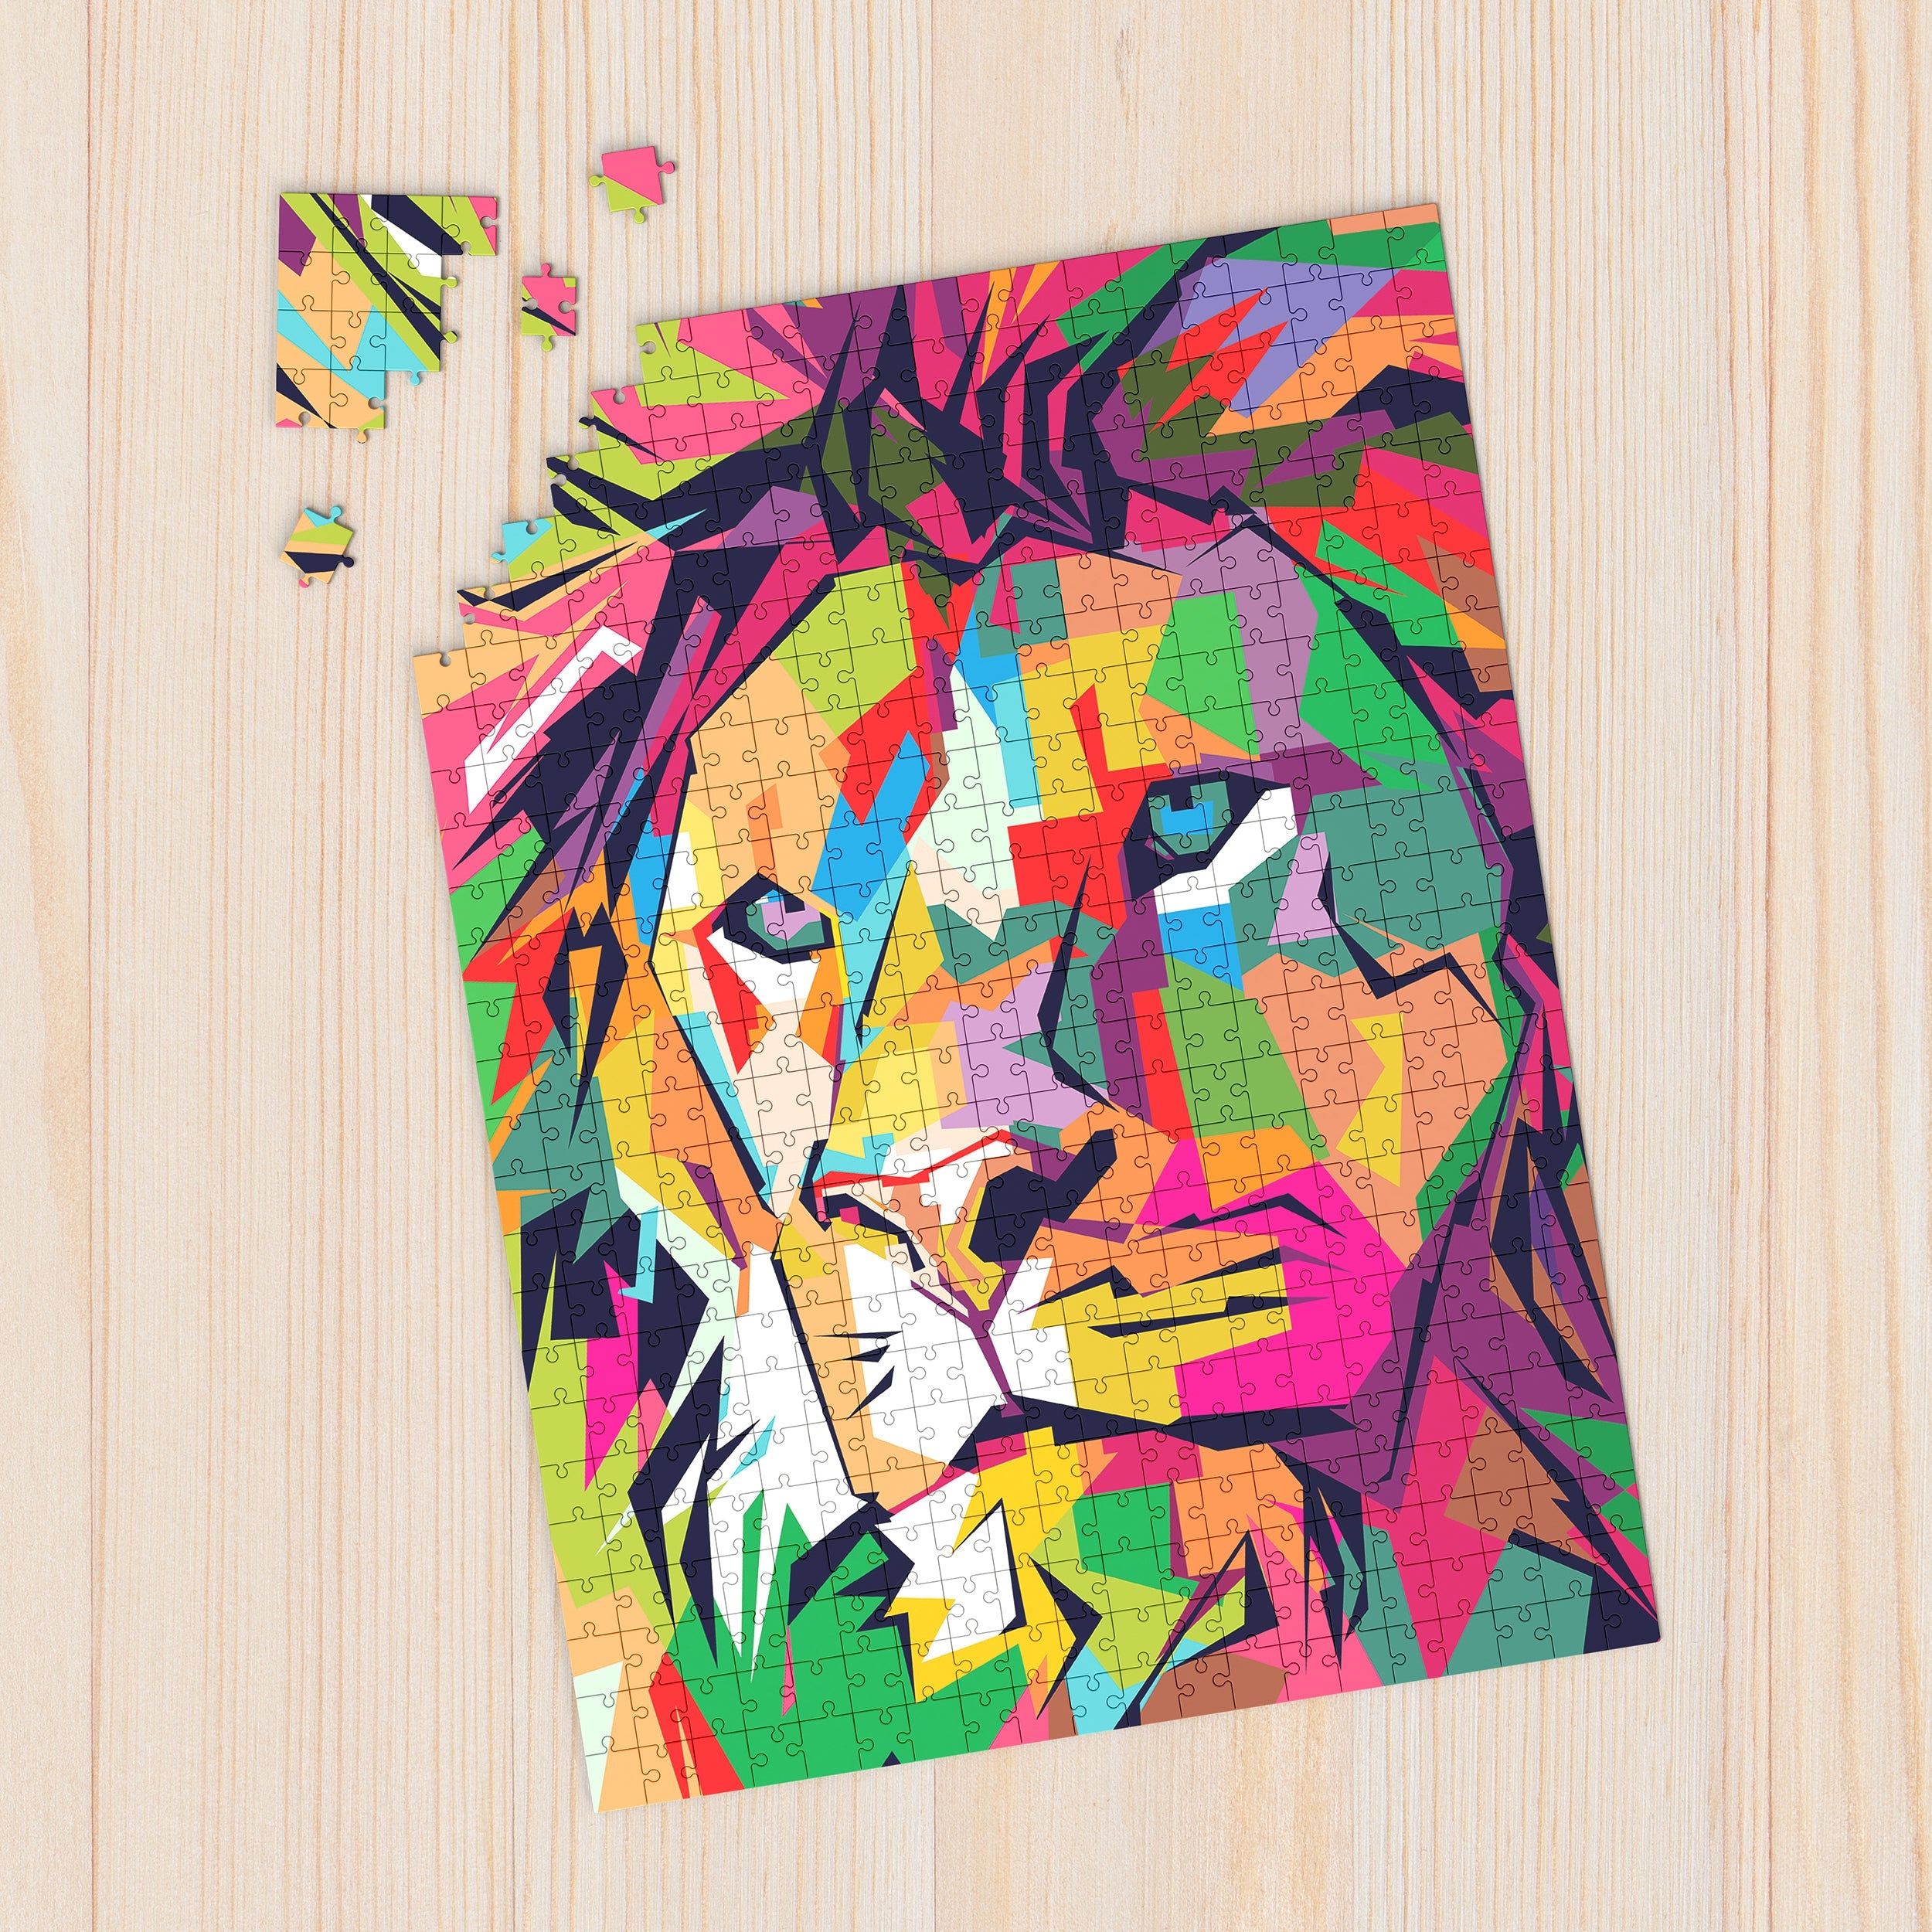 Funky Lion 500 Piece - Jigsaw Puzzle